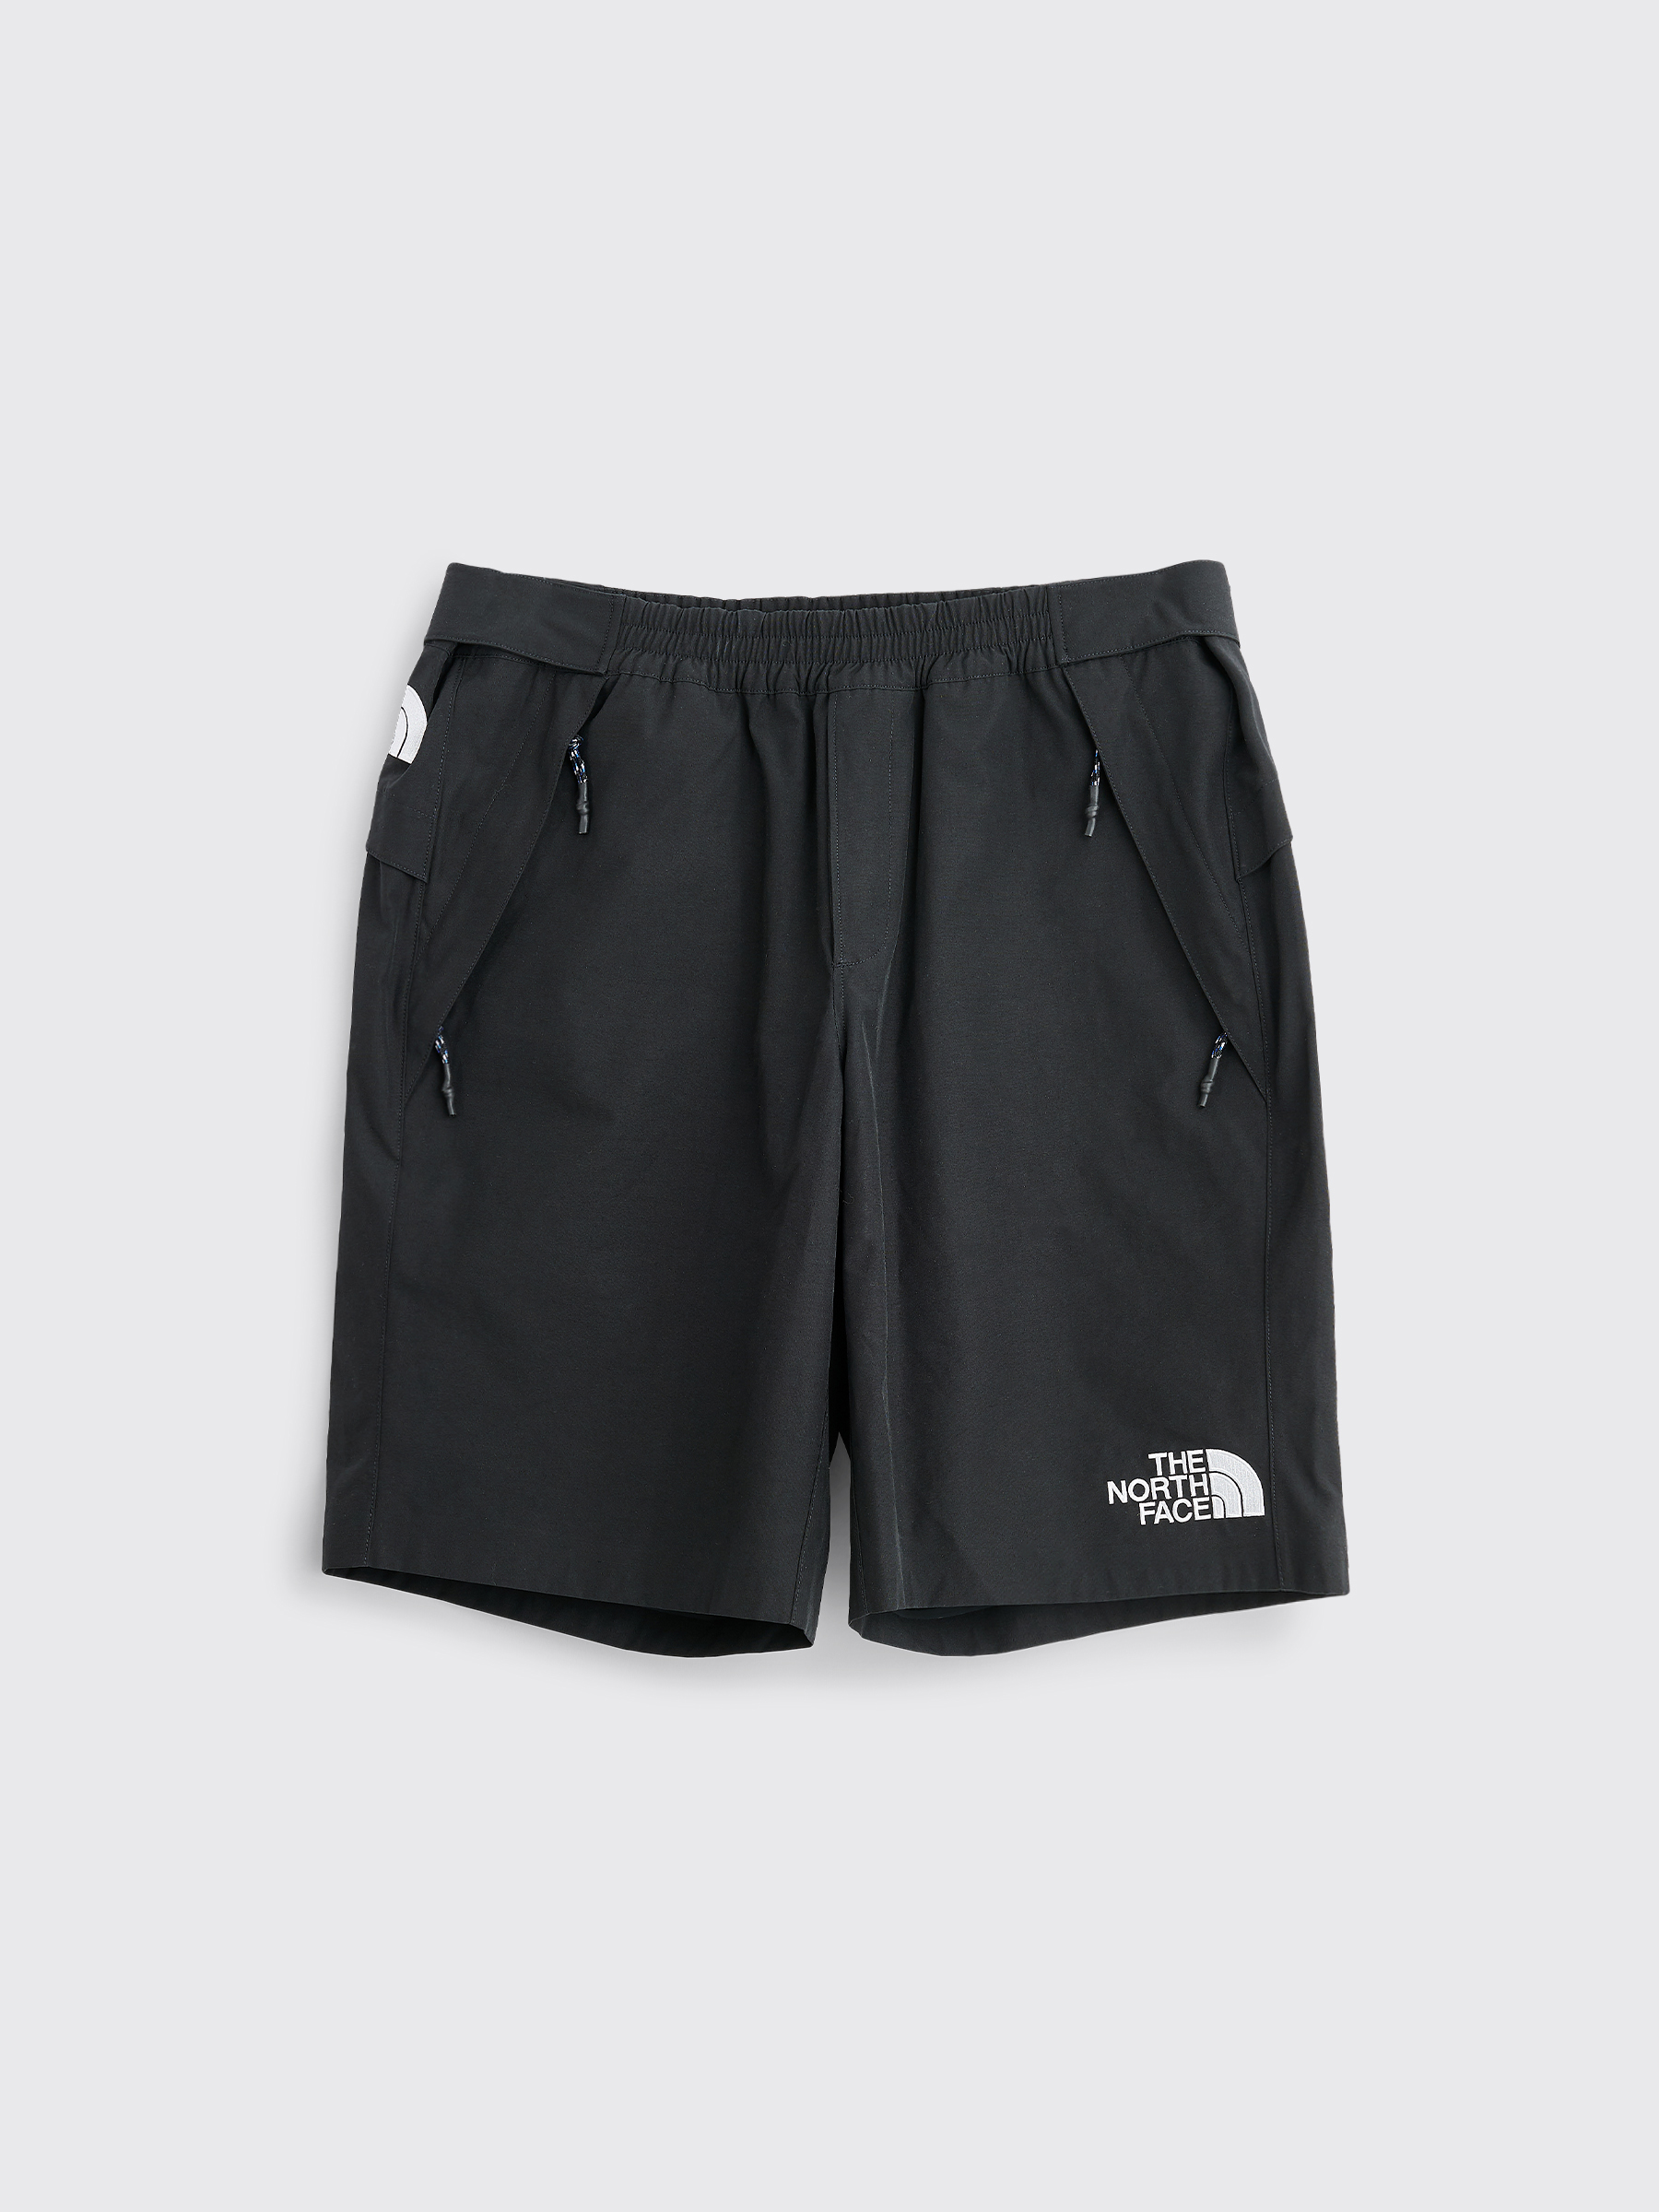 north face nylon shorts cheap online